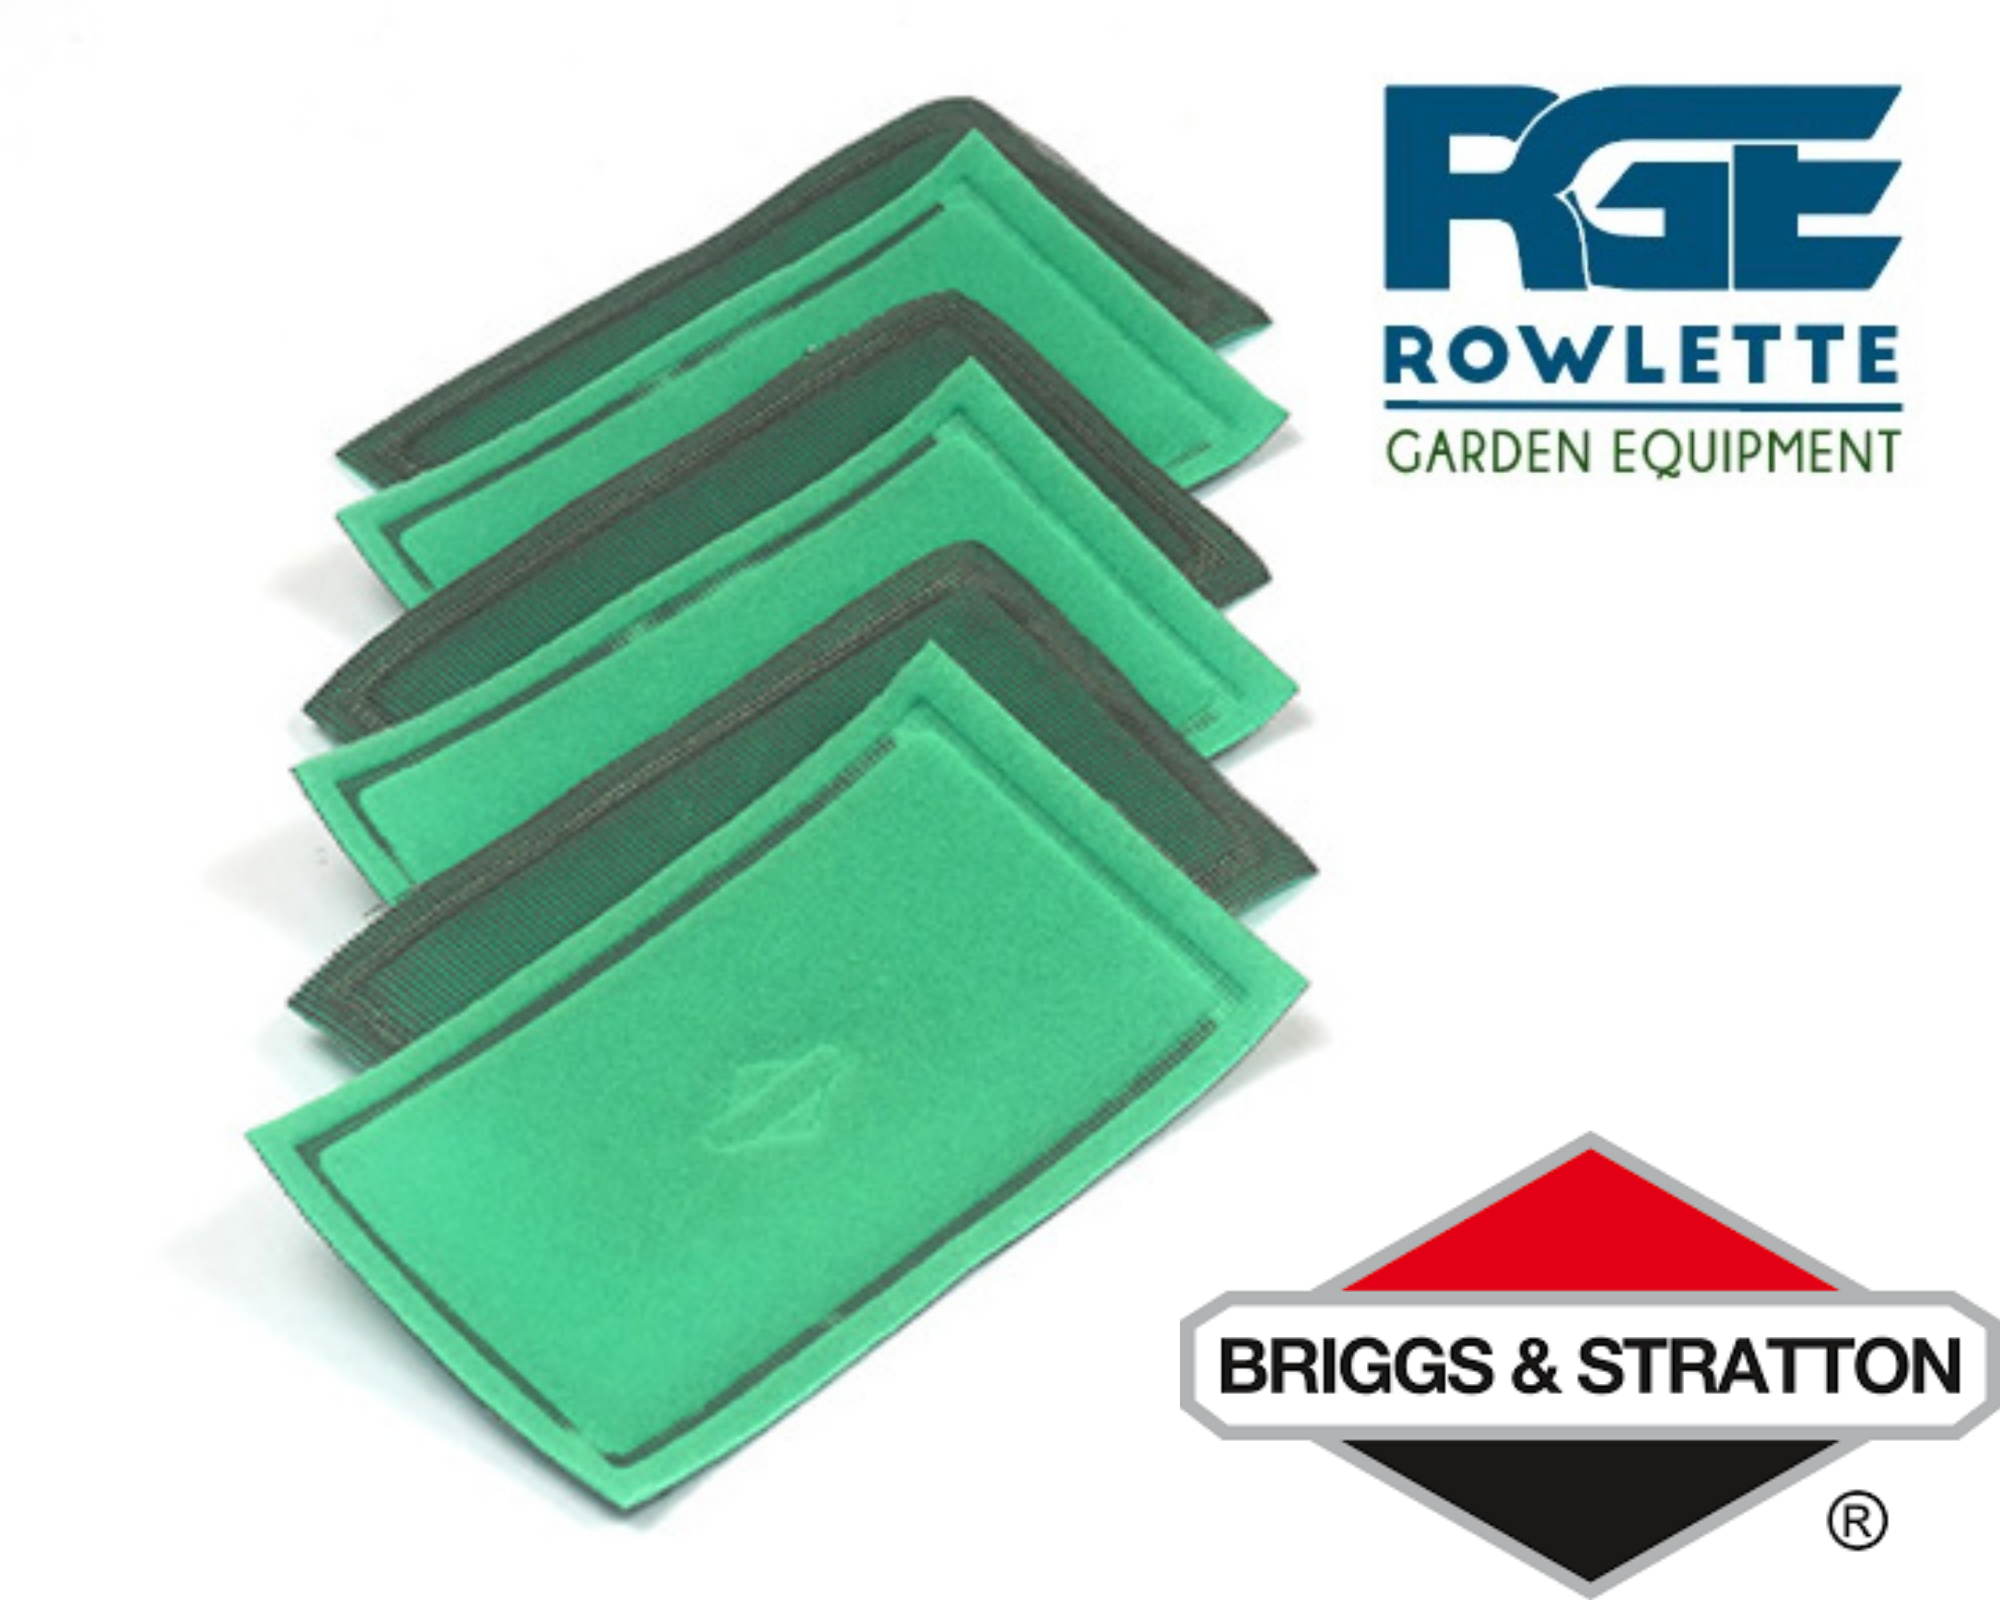 Briggs & Stratton Air Filters 6 Bulk Pack